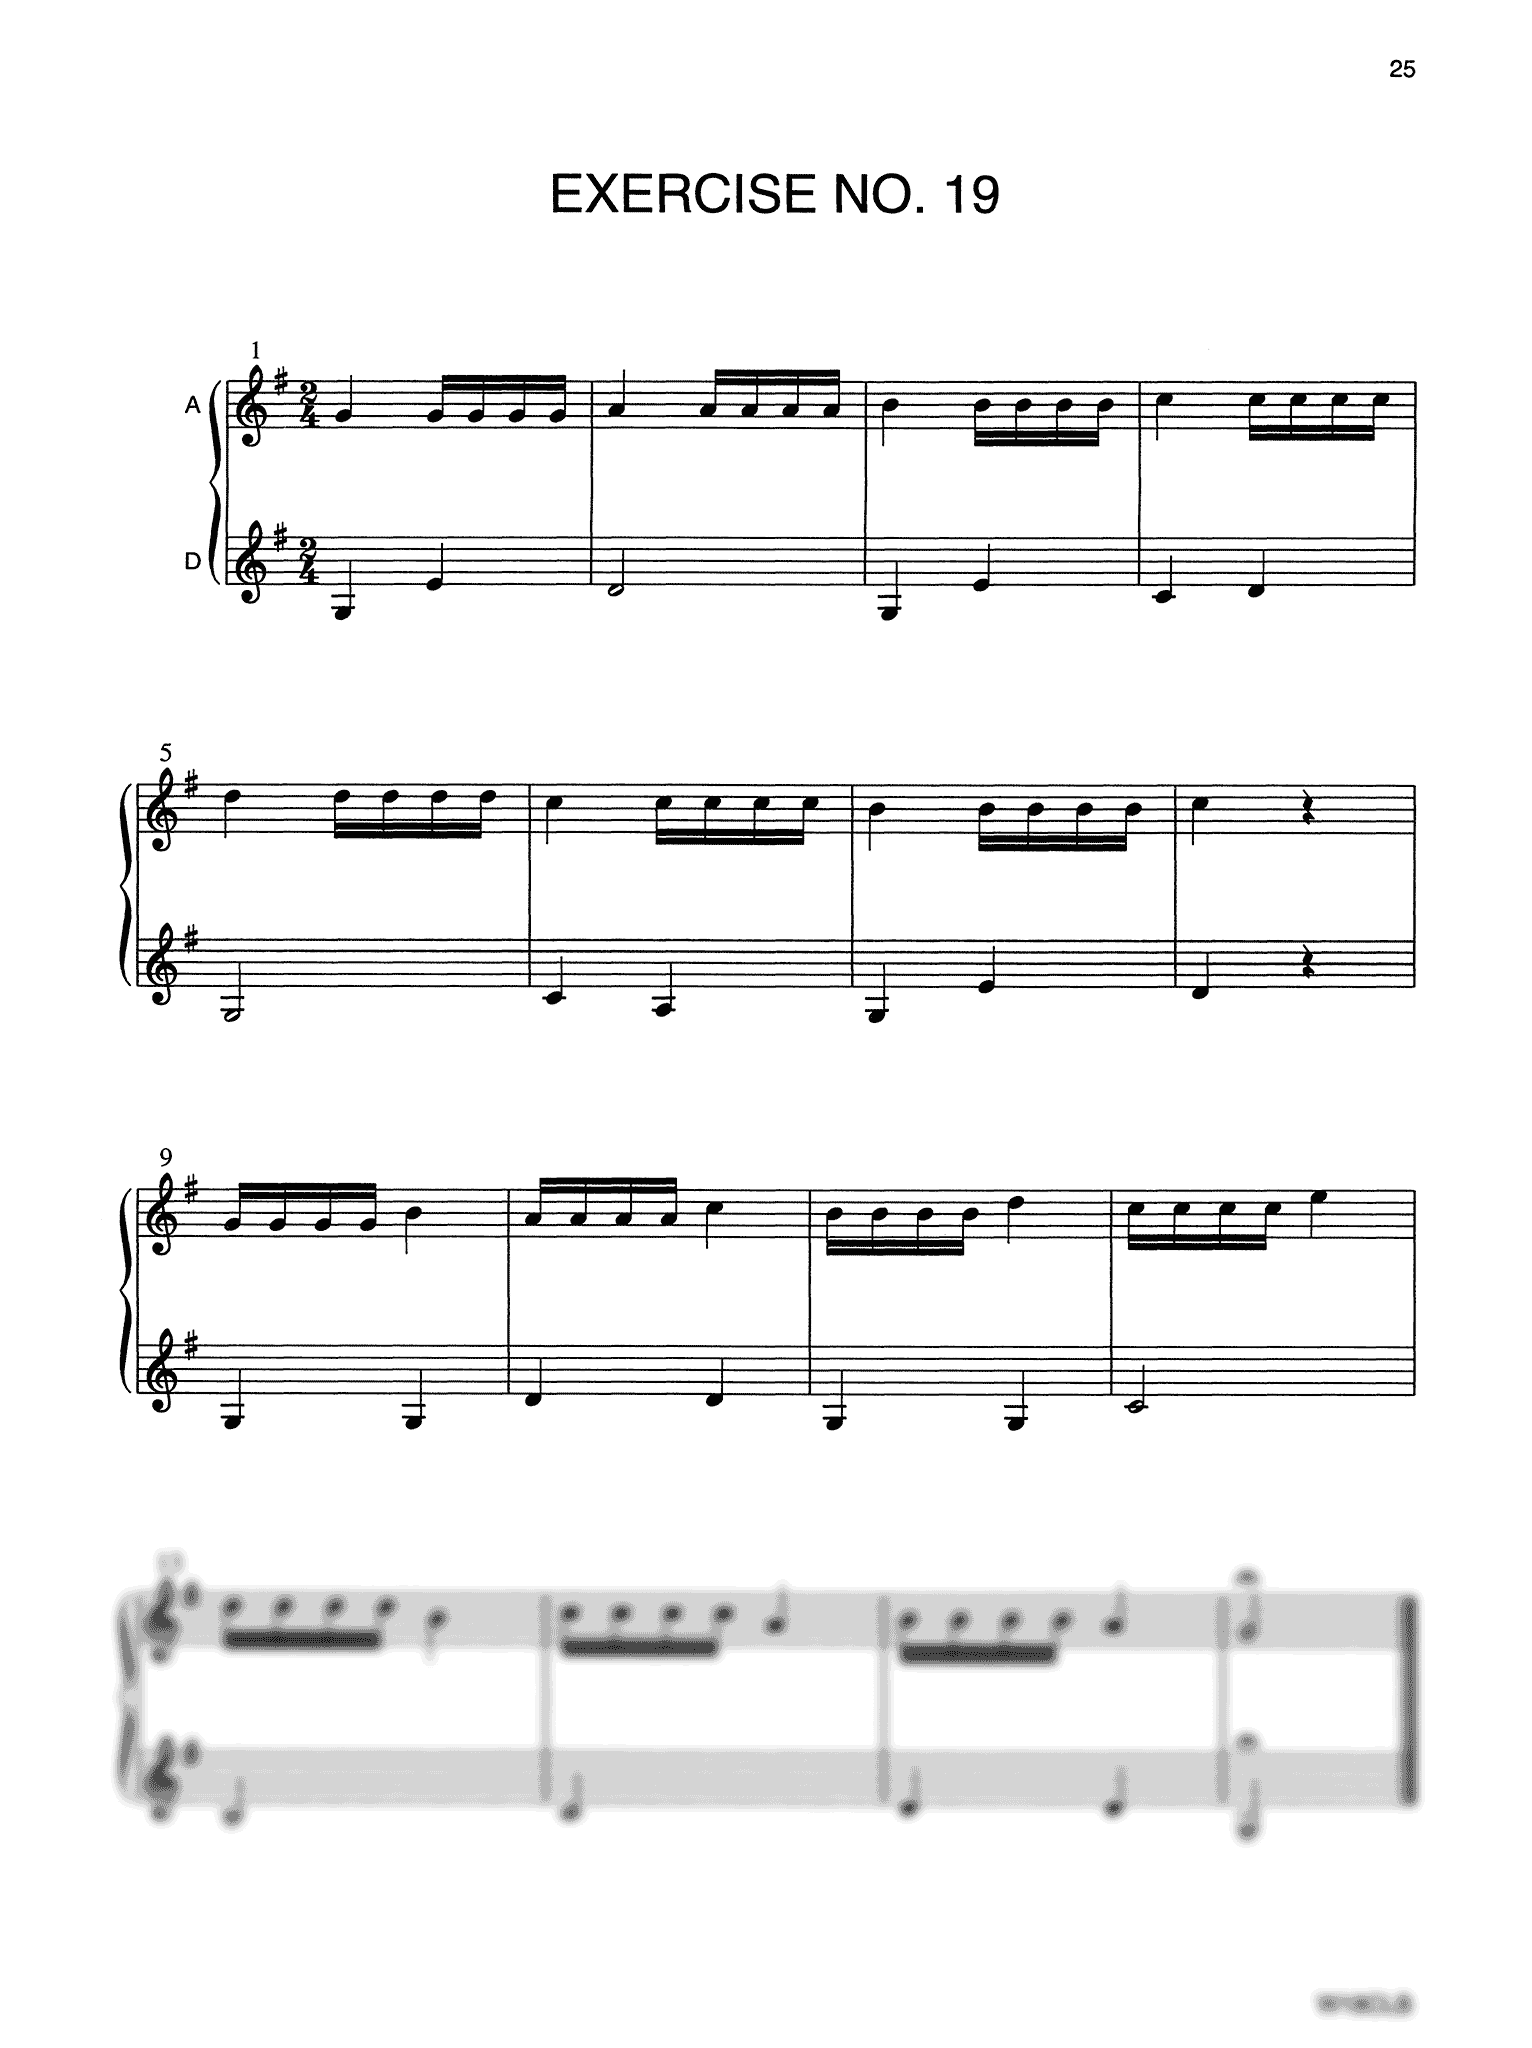 Harmonized Rhythms for Concert Band Page 25